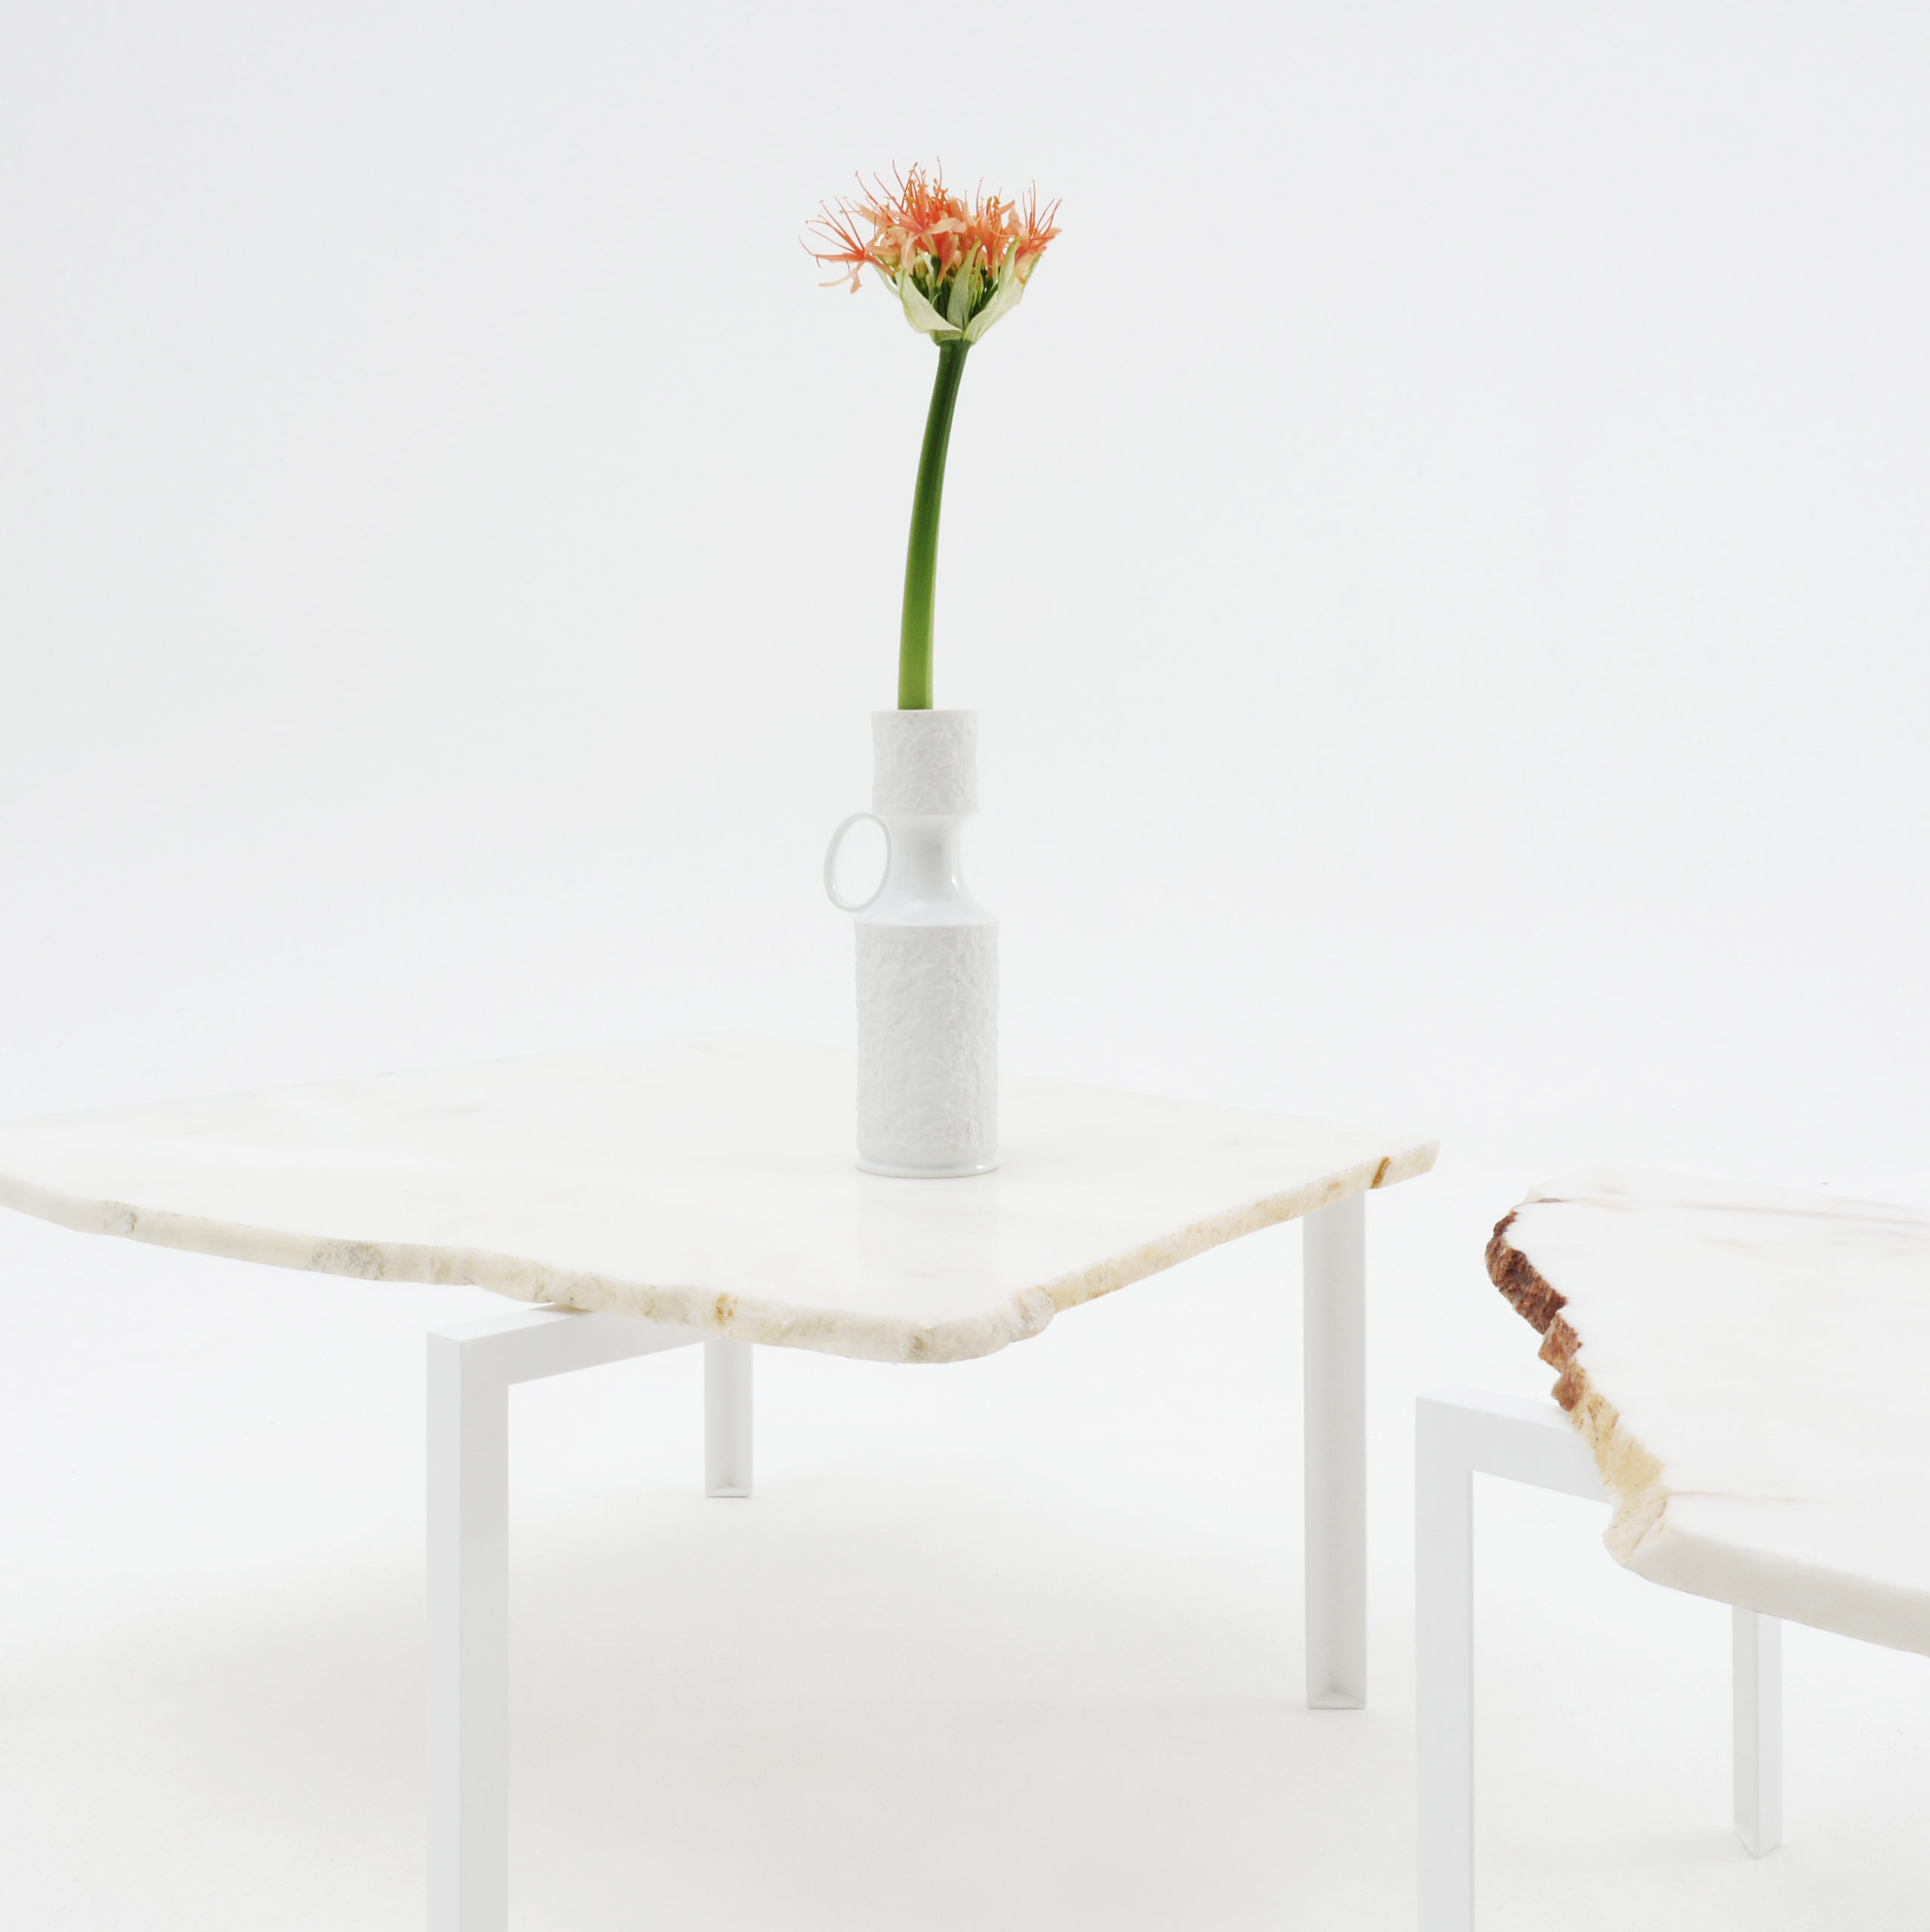 Atelier Haussmann, Petite table d’angle von Hervé Humbert, Marmorplatte Nr. 30 und 31